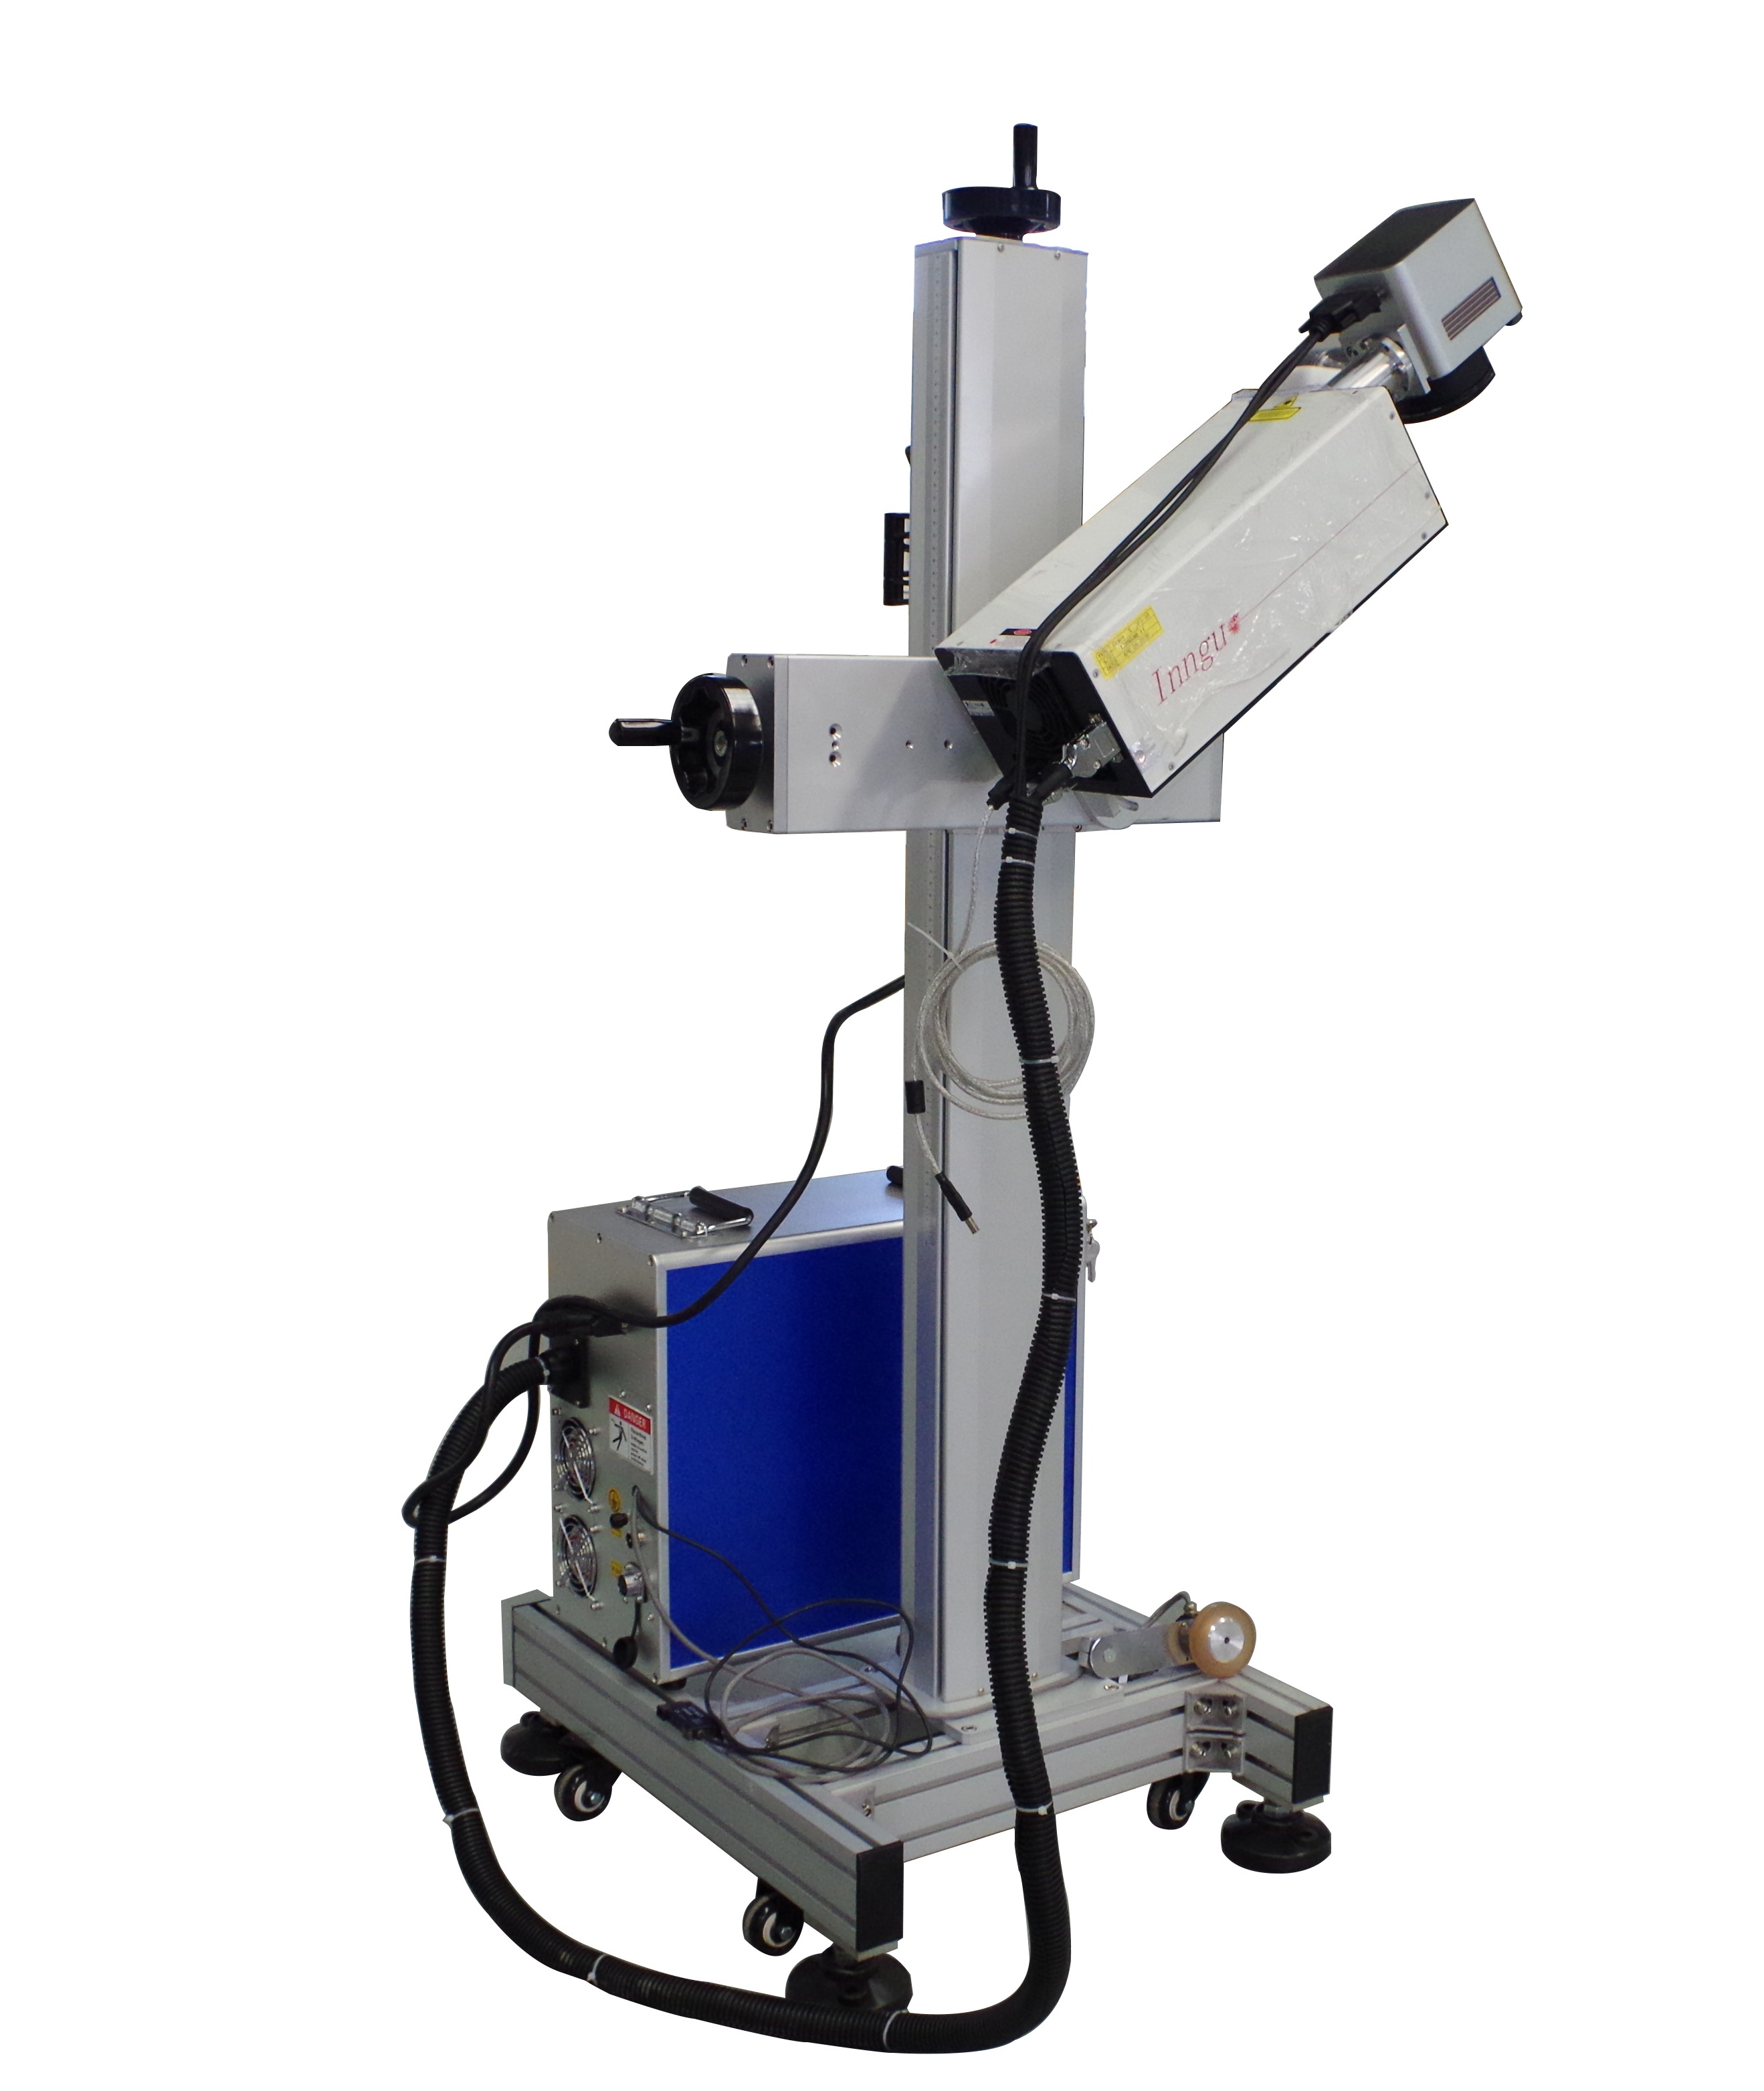 Flying 3W 5W UV Laser Printer Marking Machine สำหรับทำเครื่องหมายบรรจุภัณฑ์อาหาร PET PP, Qr Code Bar Code Laser Marker